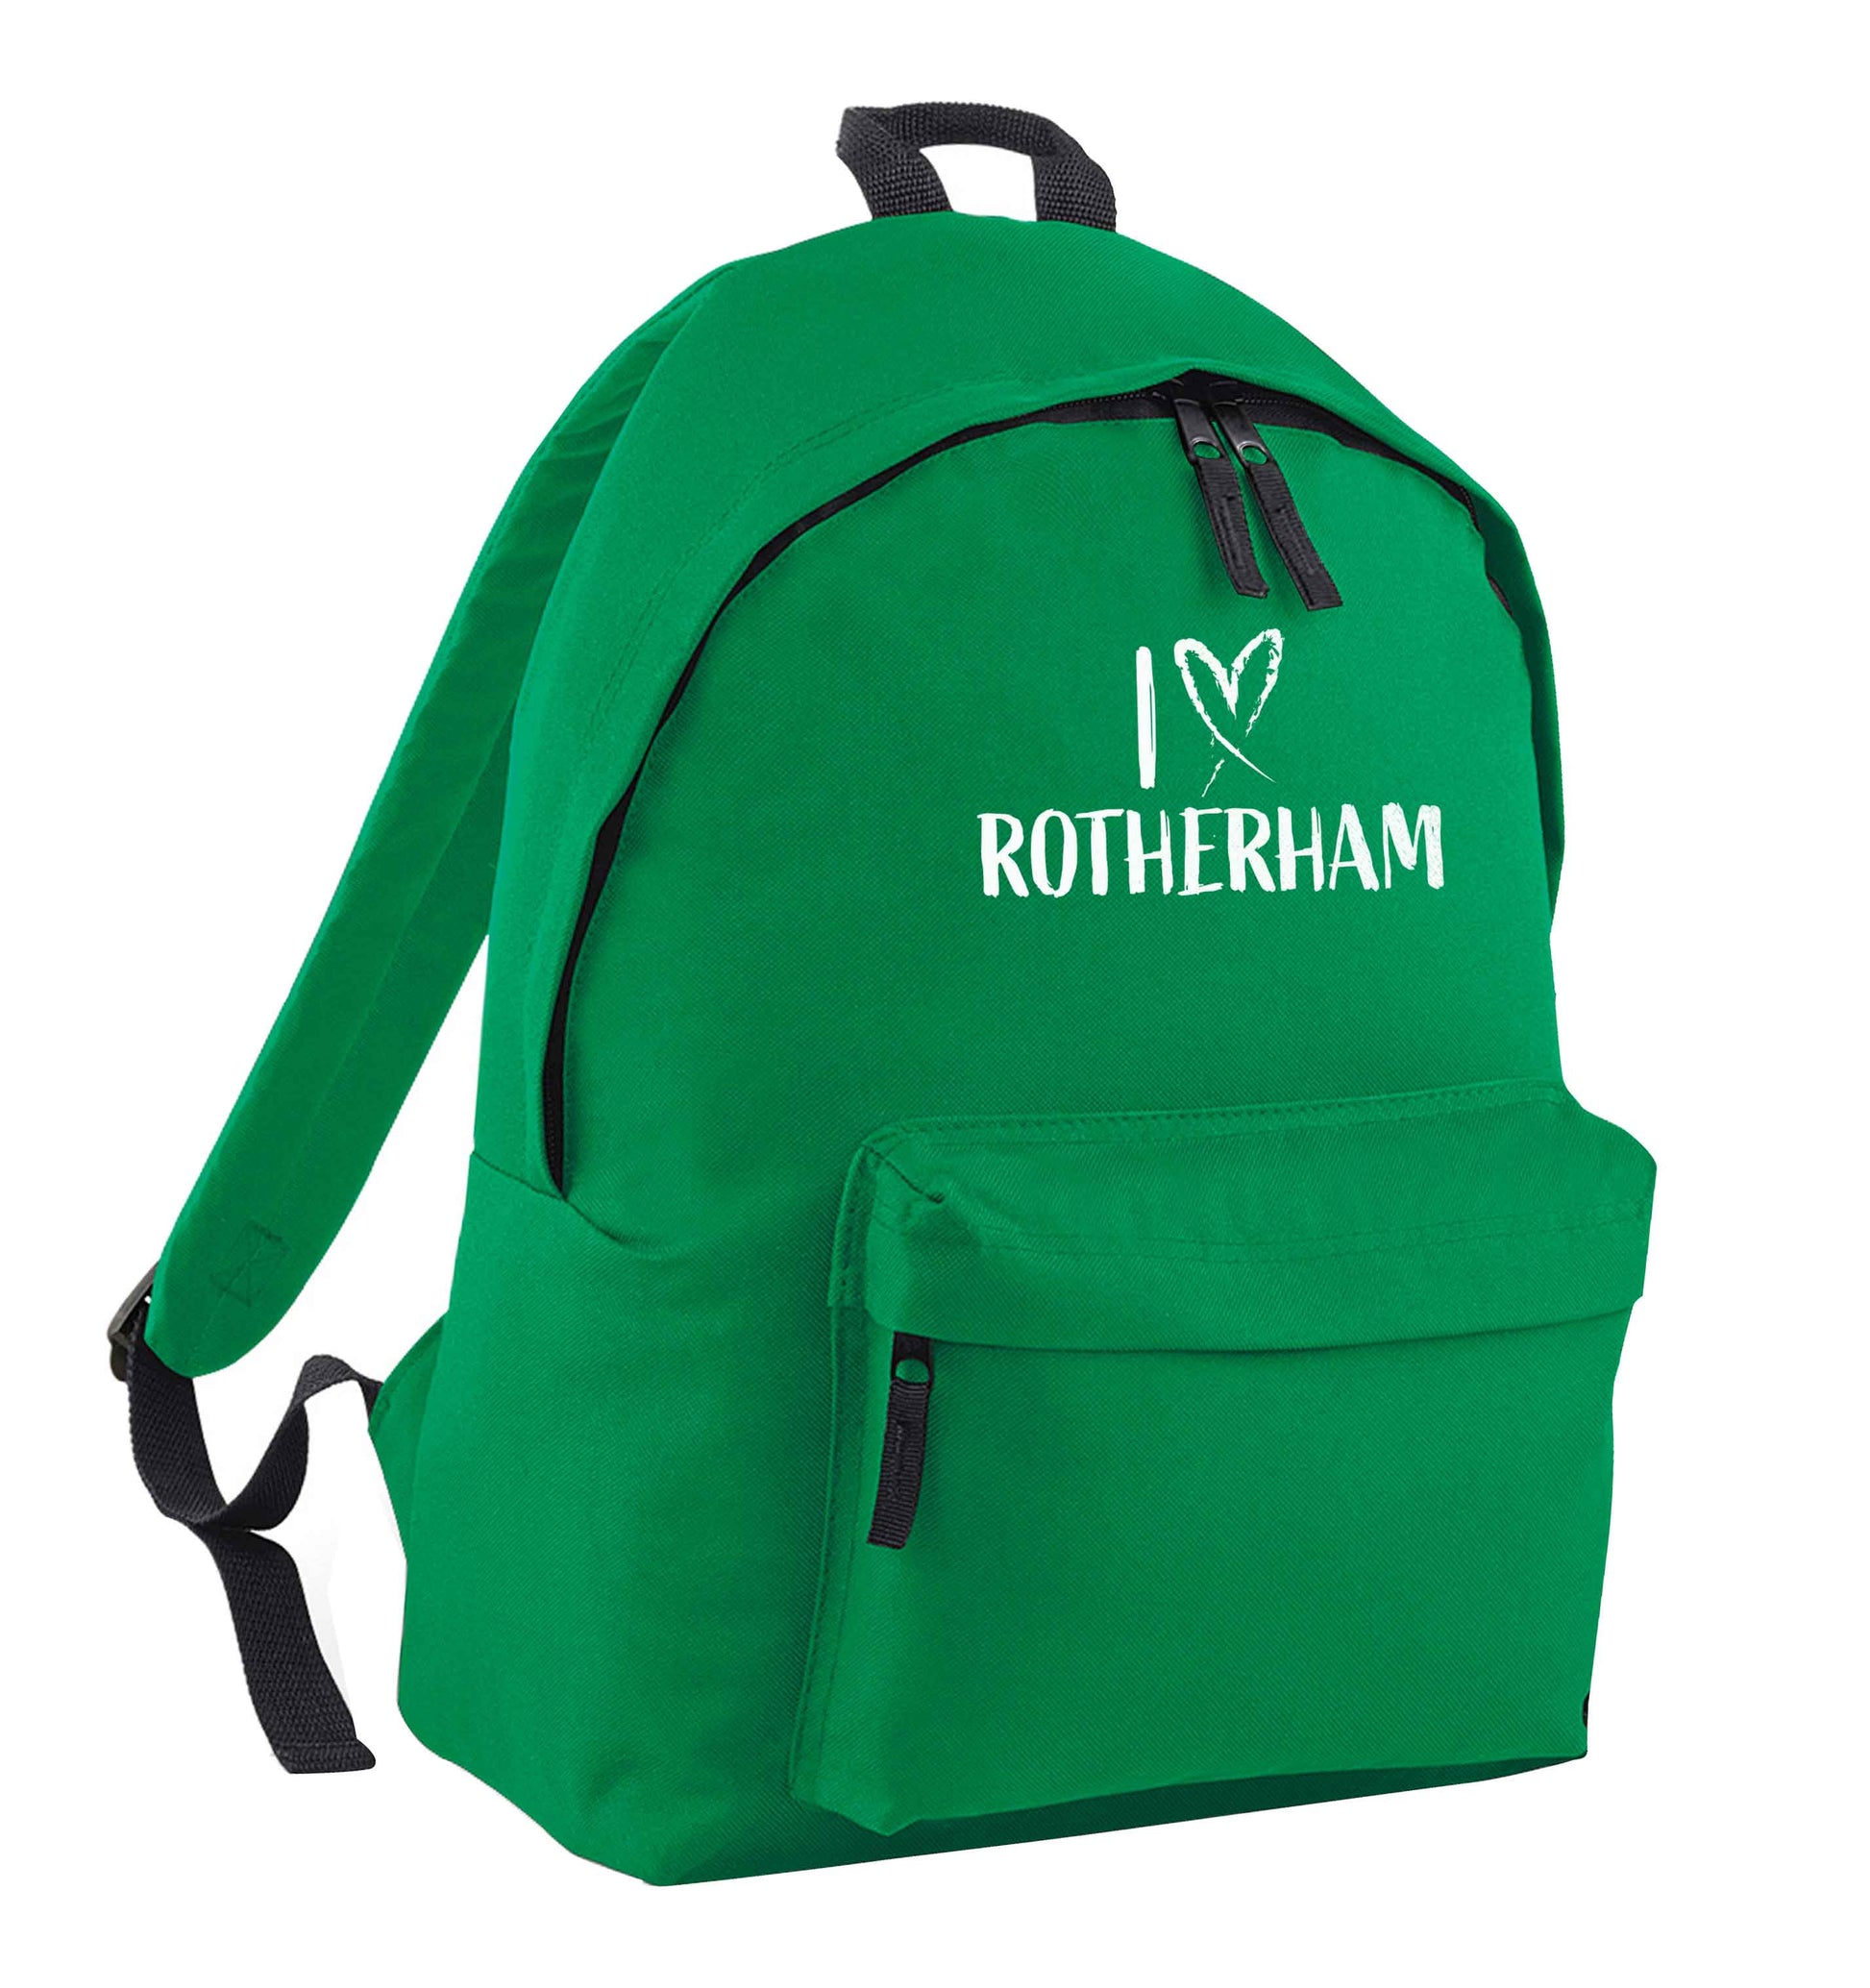 I love Rotherham green adults backpack